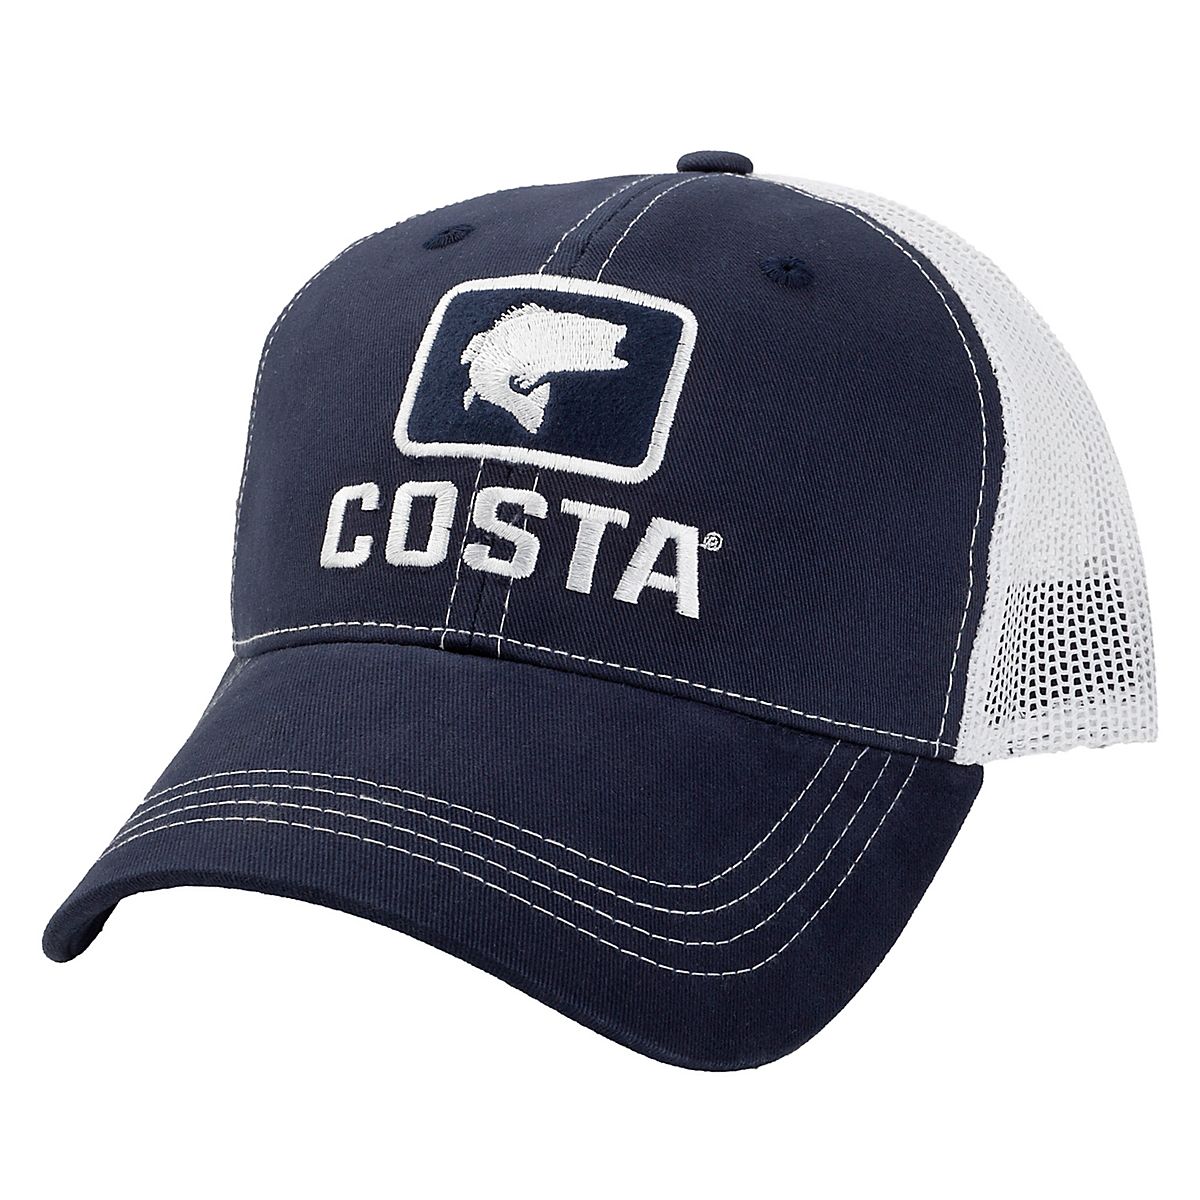 BRAND NEW COSTA DEL MAR BASS TRUCKER CAP HAT BROWN - HOT HOT